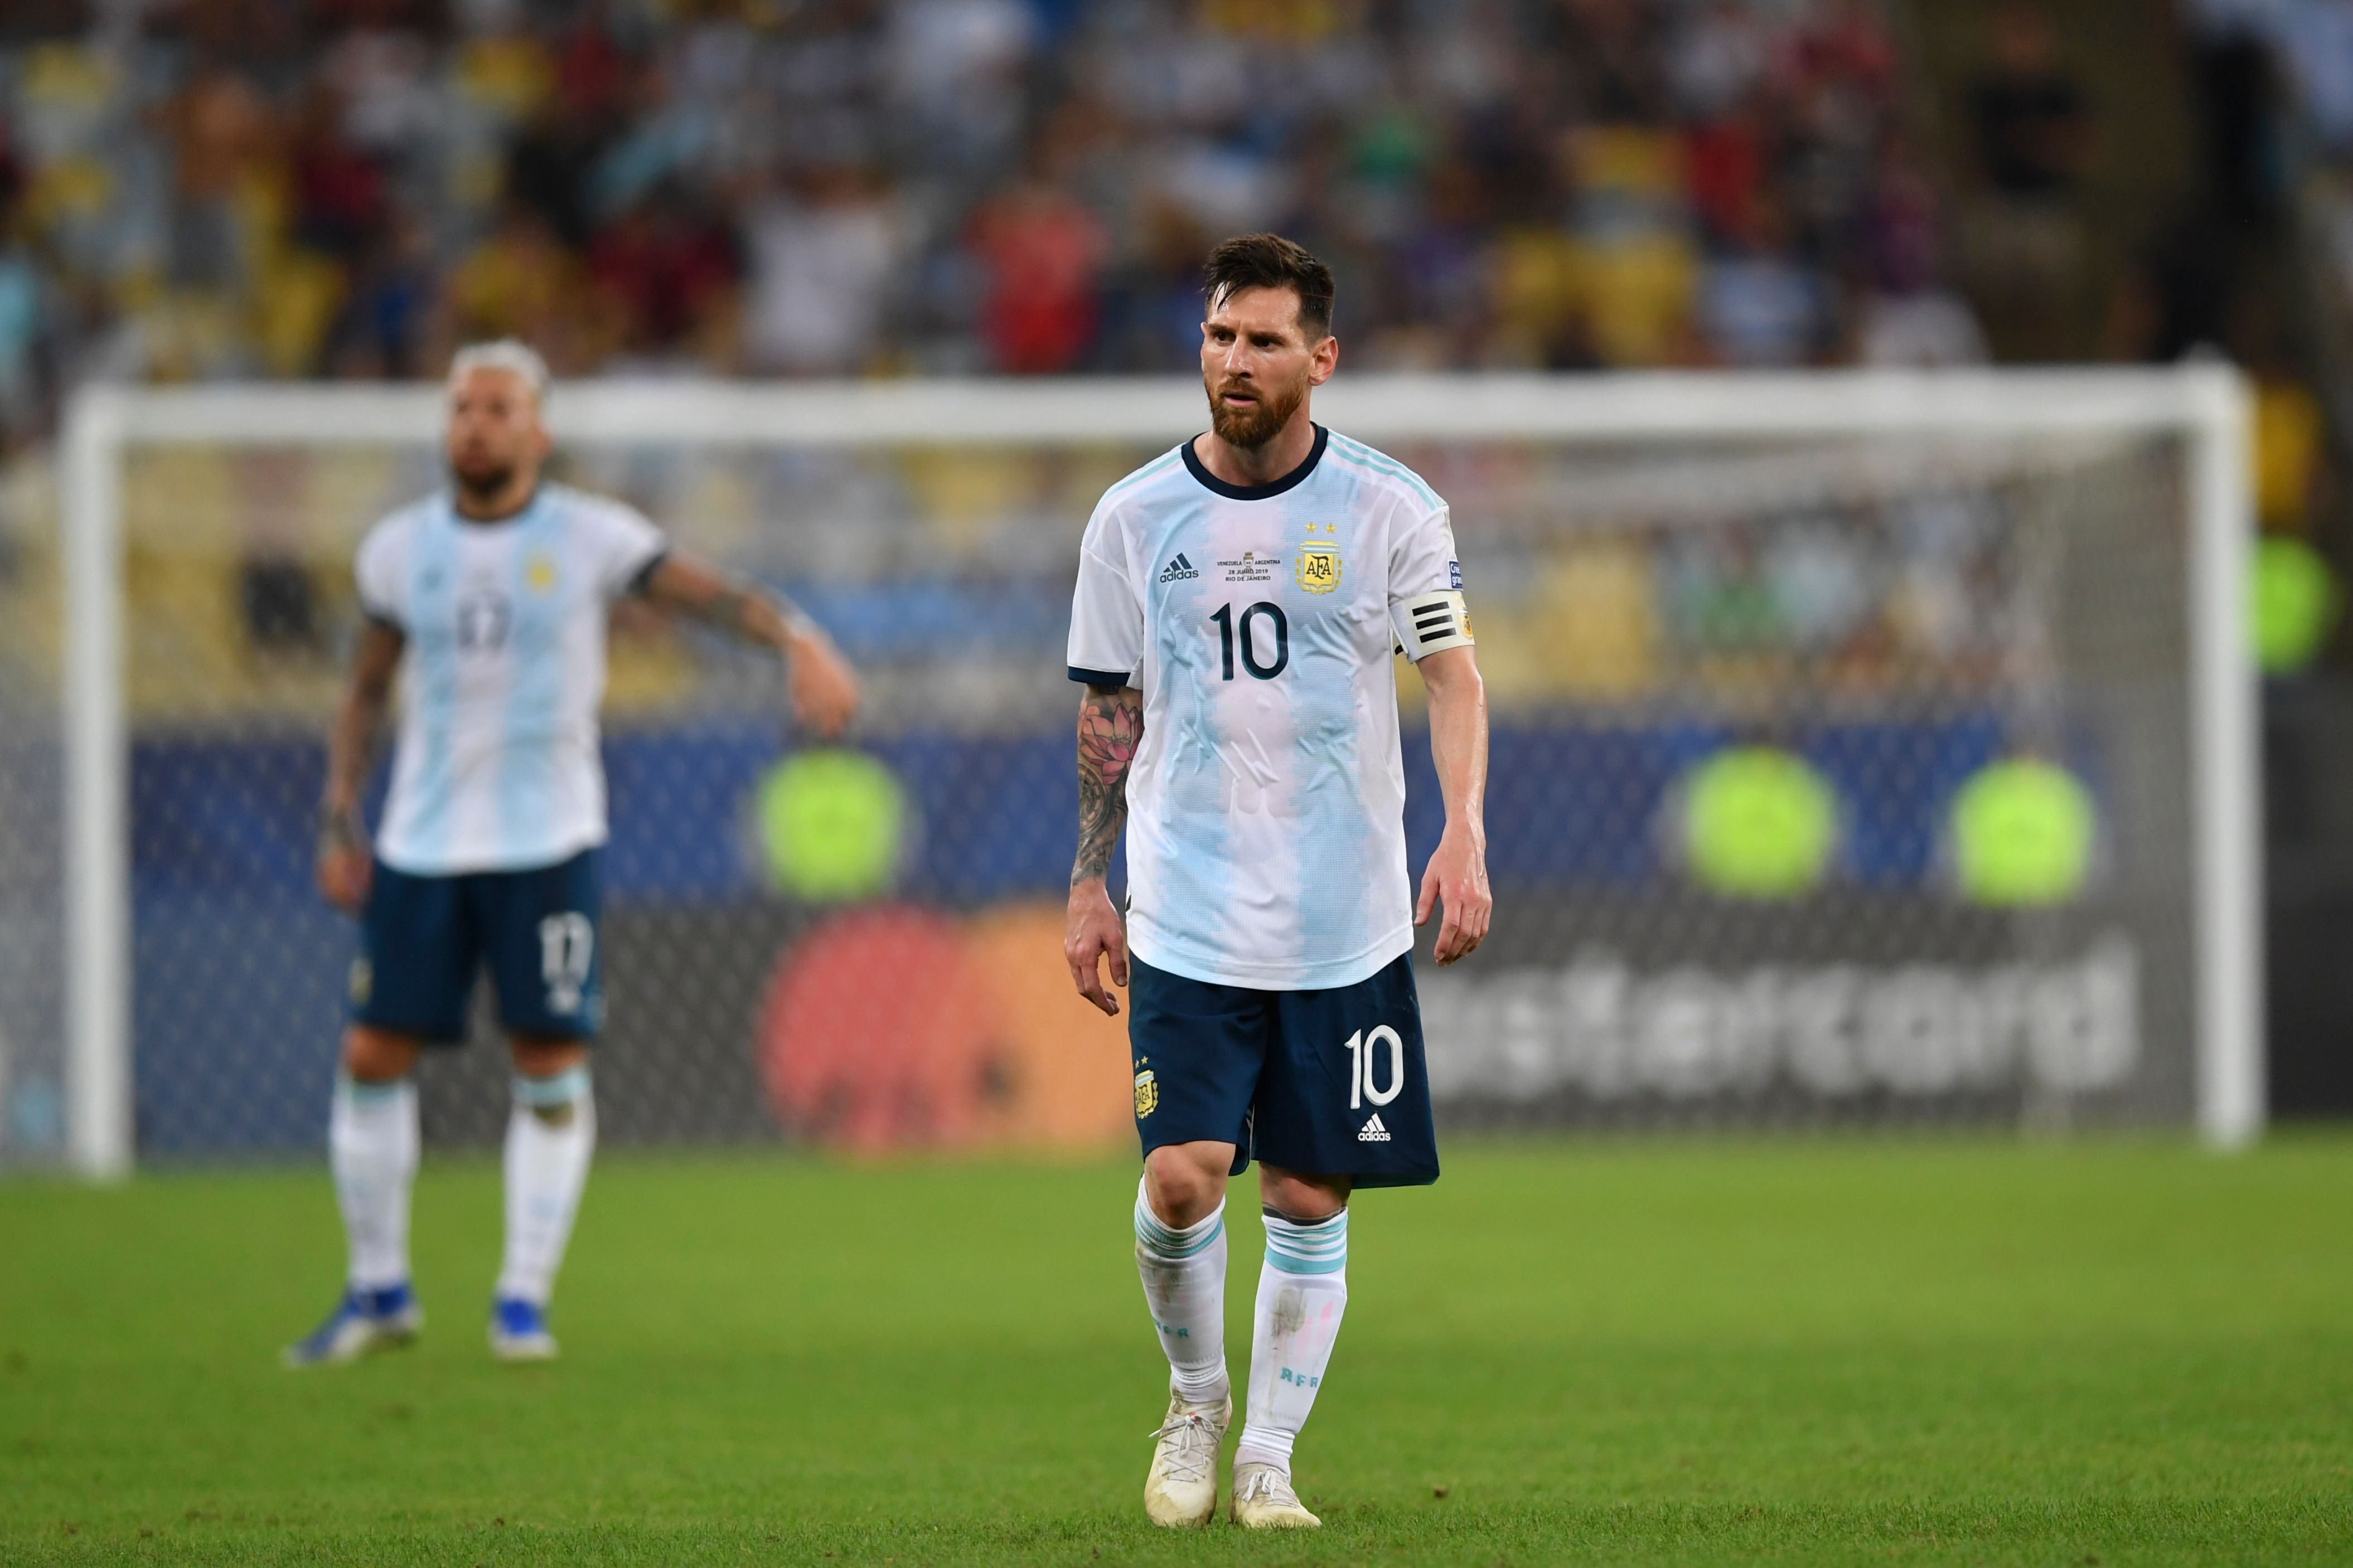 Messi donirao 500.000 eura argentinskim bolnicama